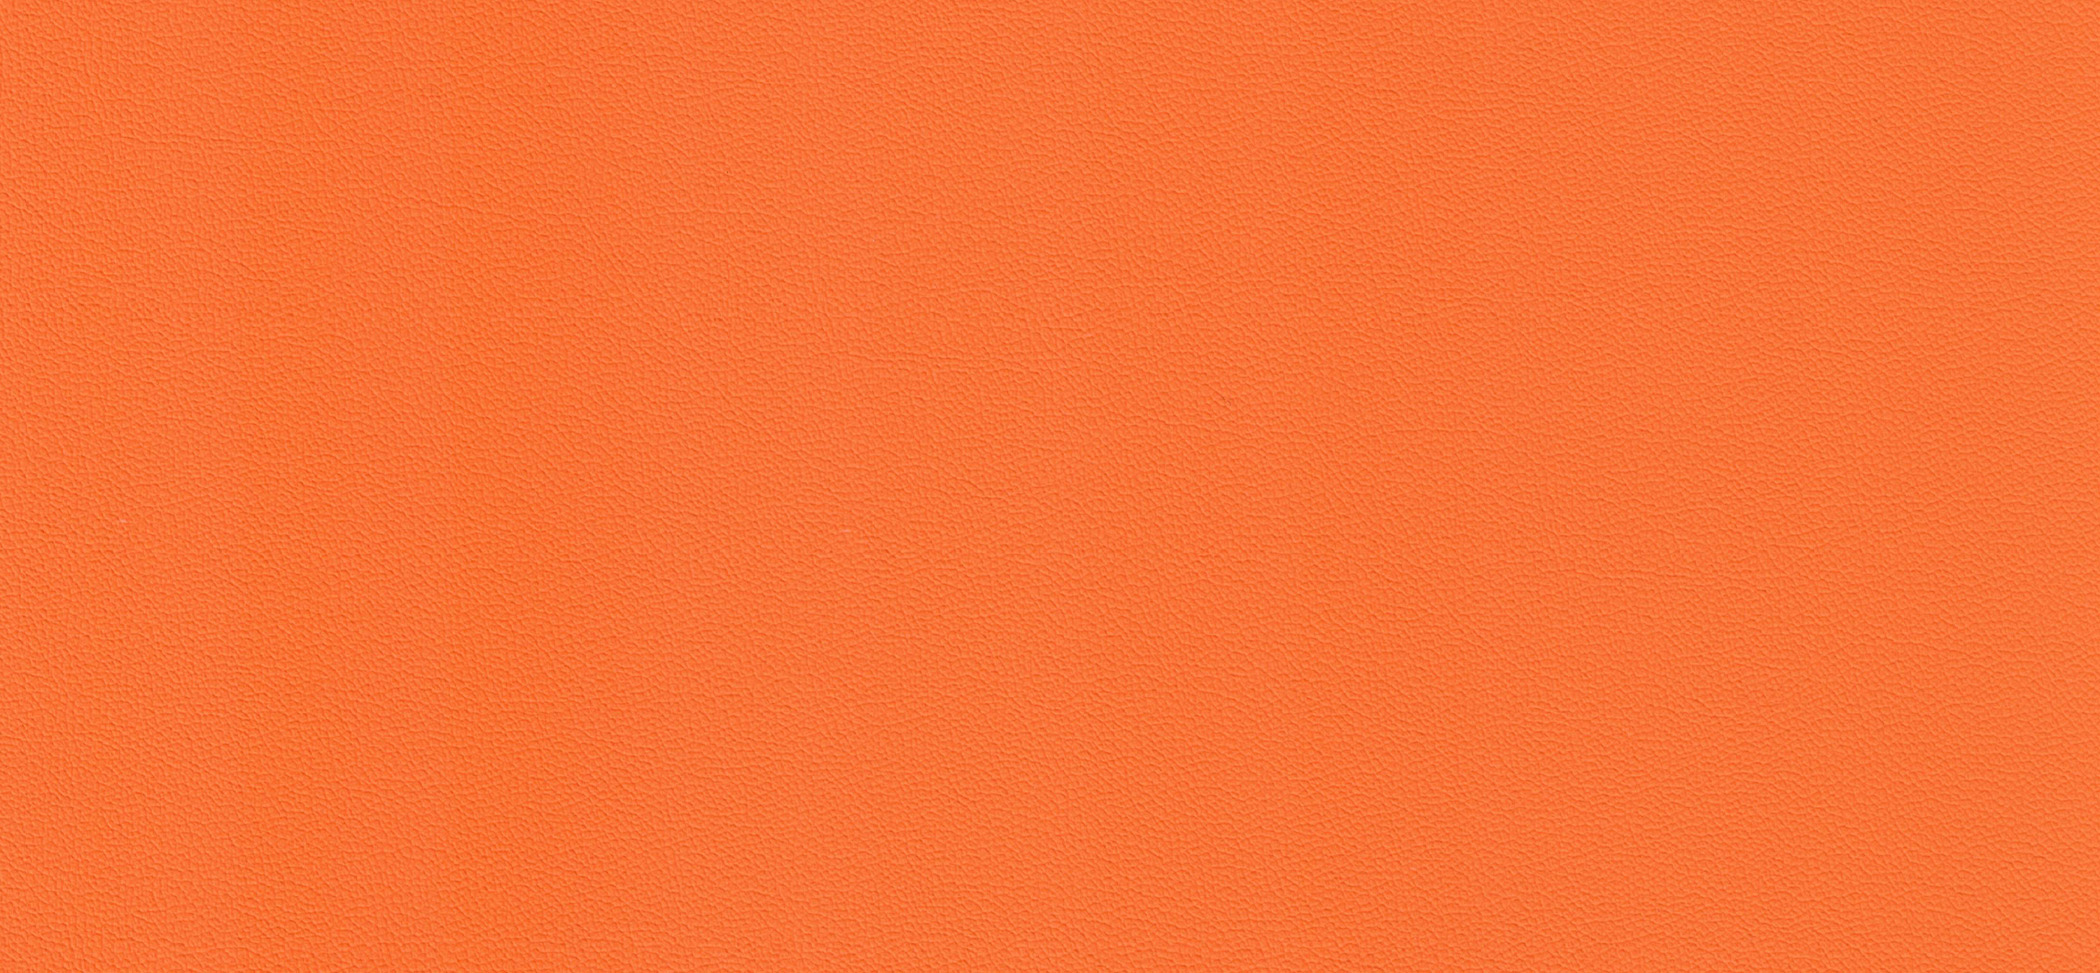 Cleanness orange